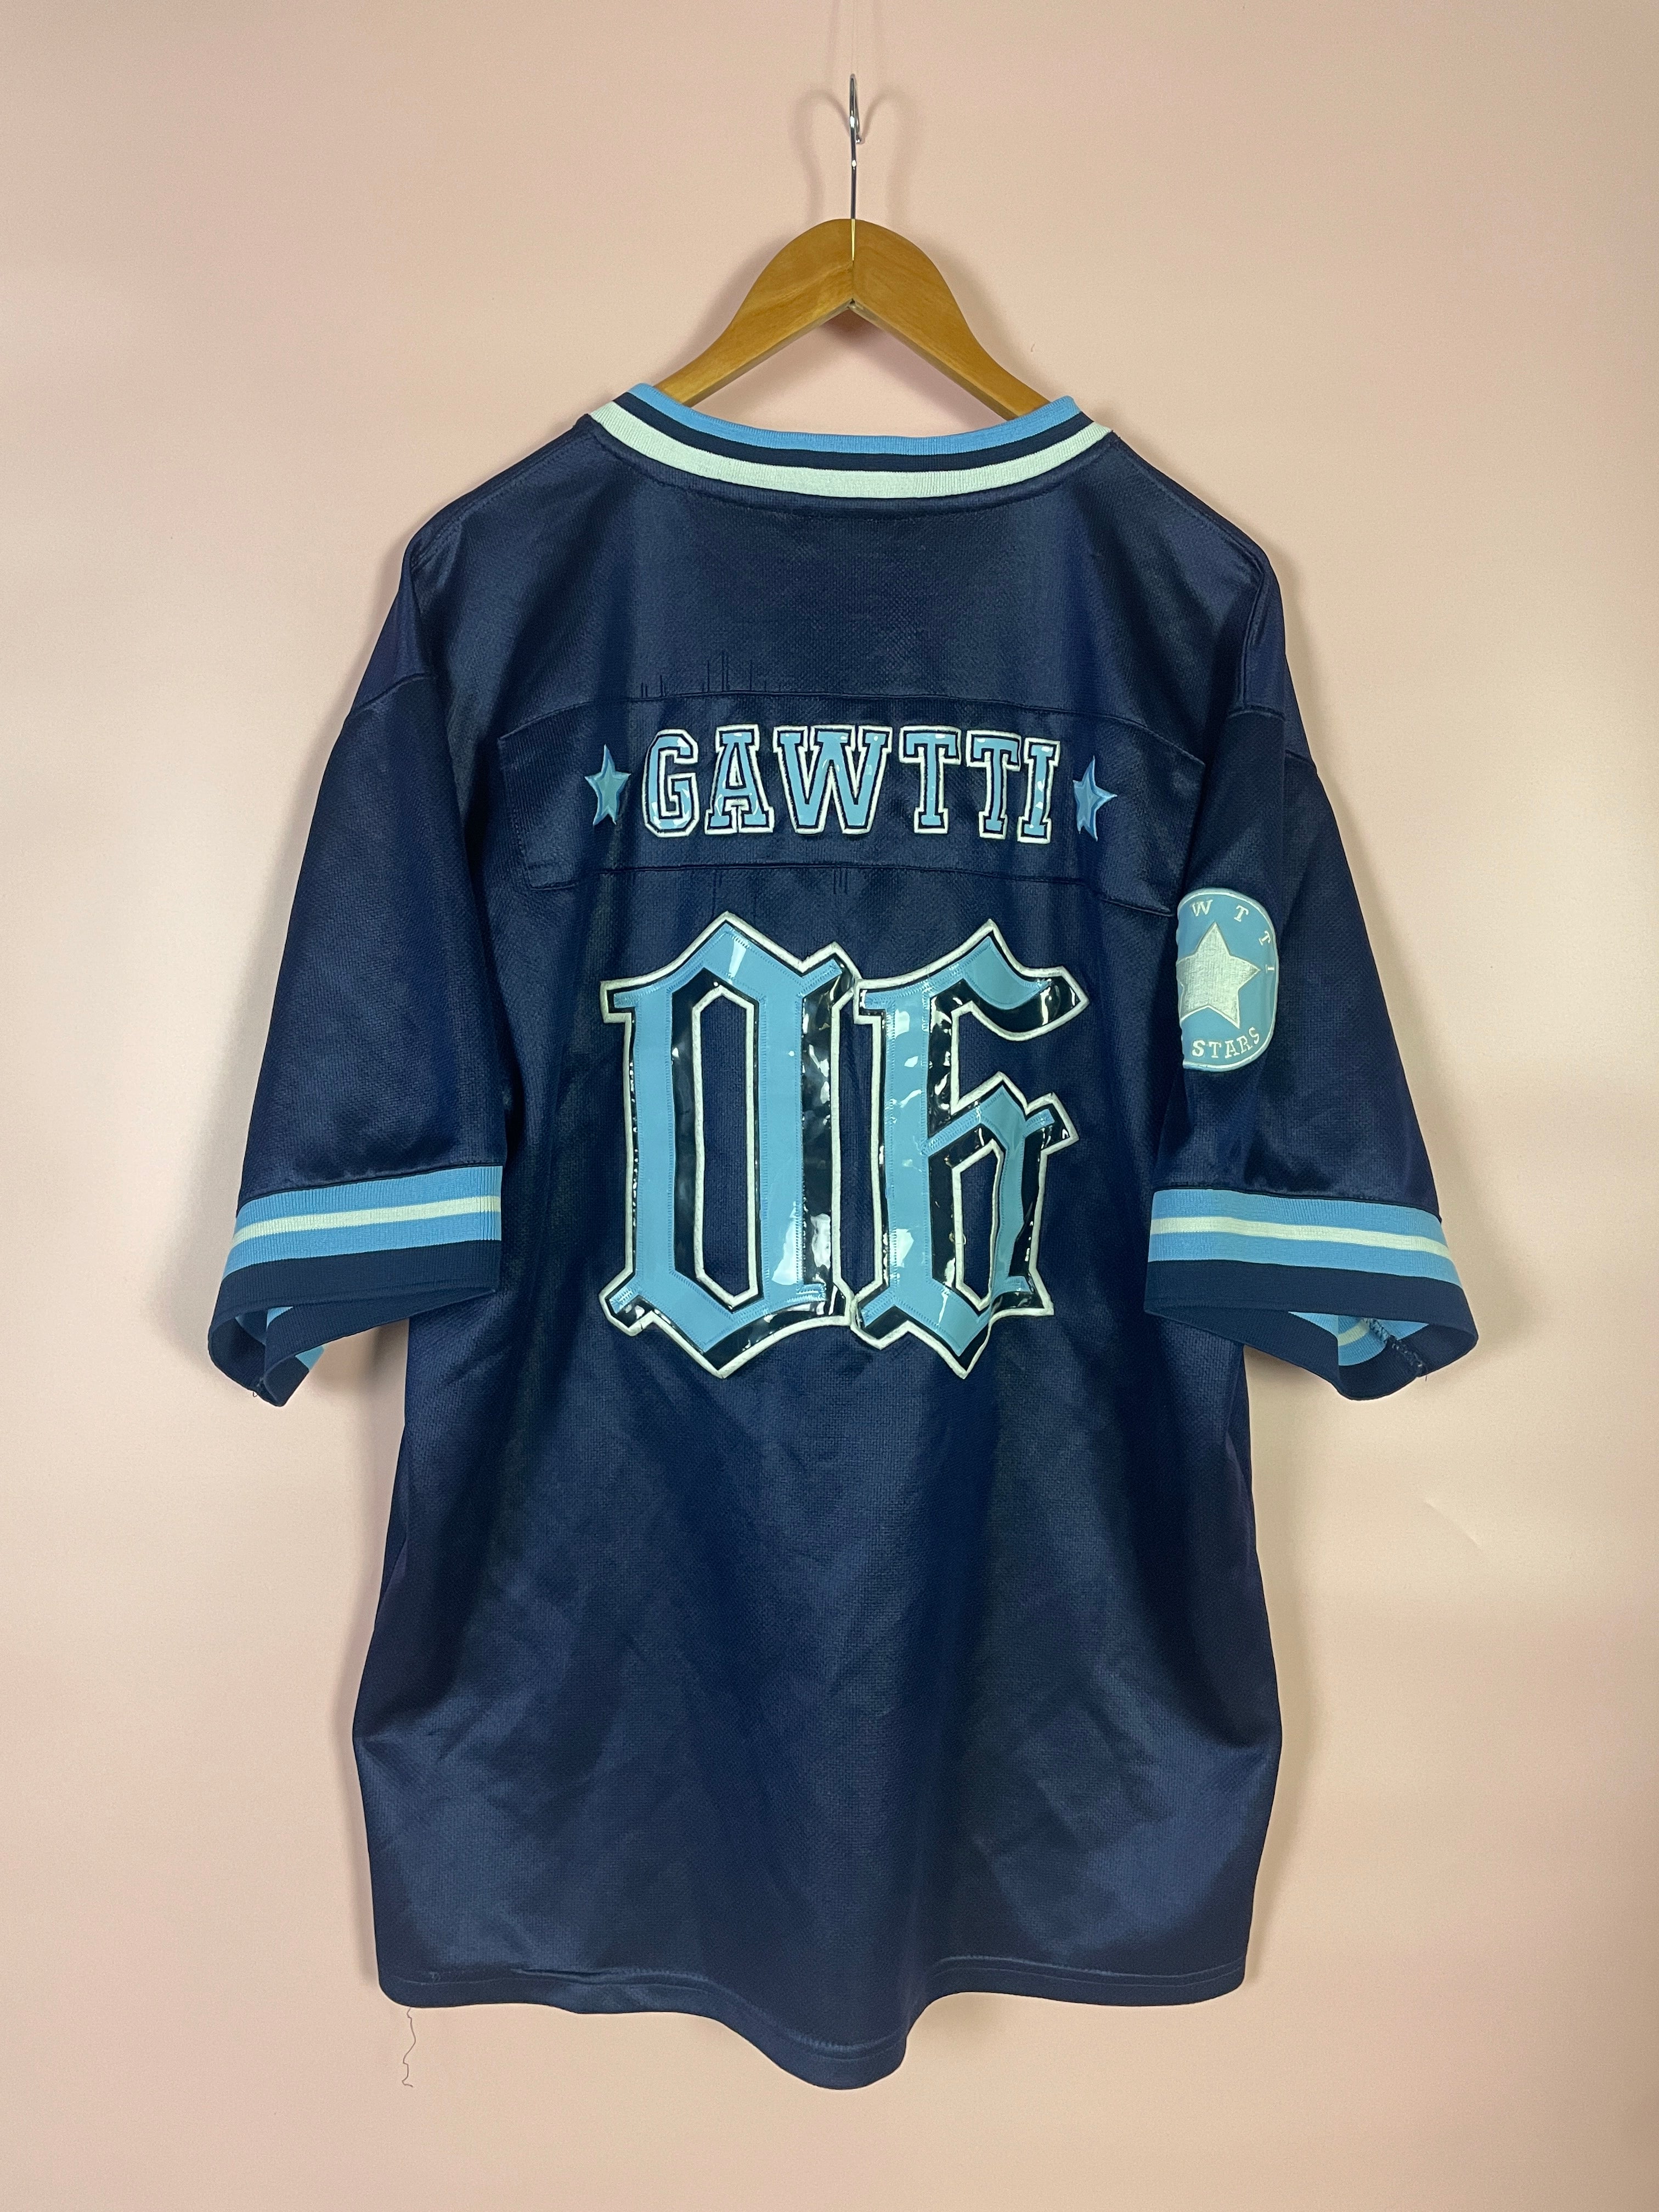 Gawtti Shirt Vintage Gawtti 90s Hip Hop Clothing Jersey Shirt